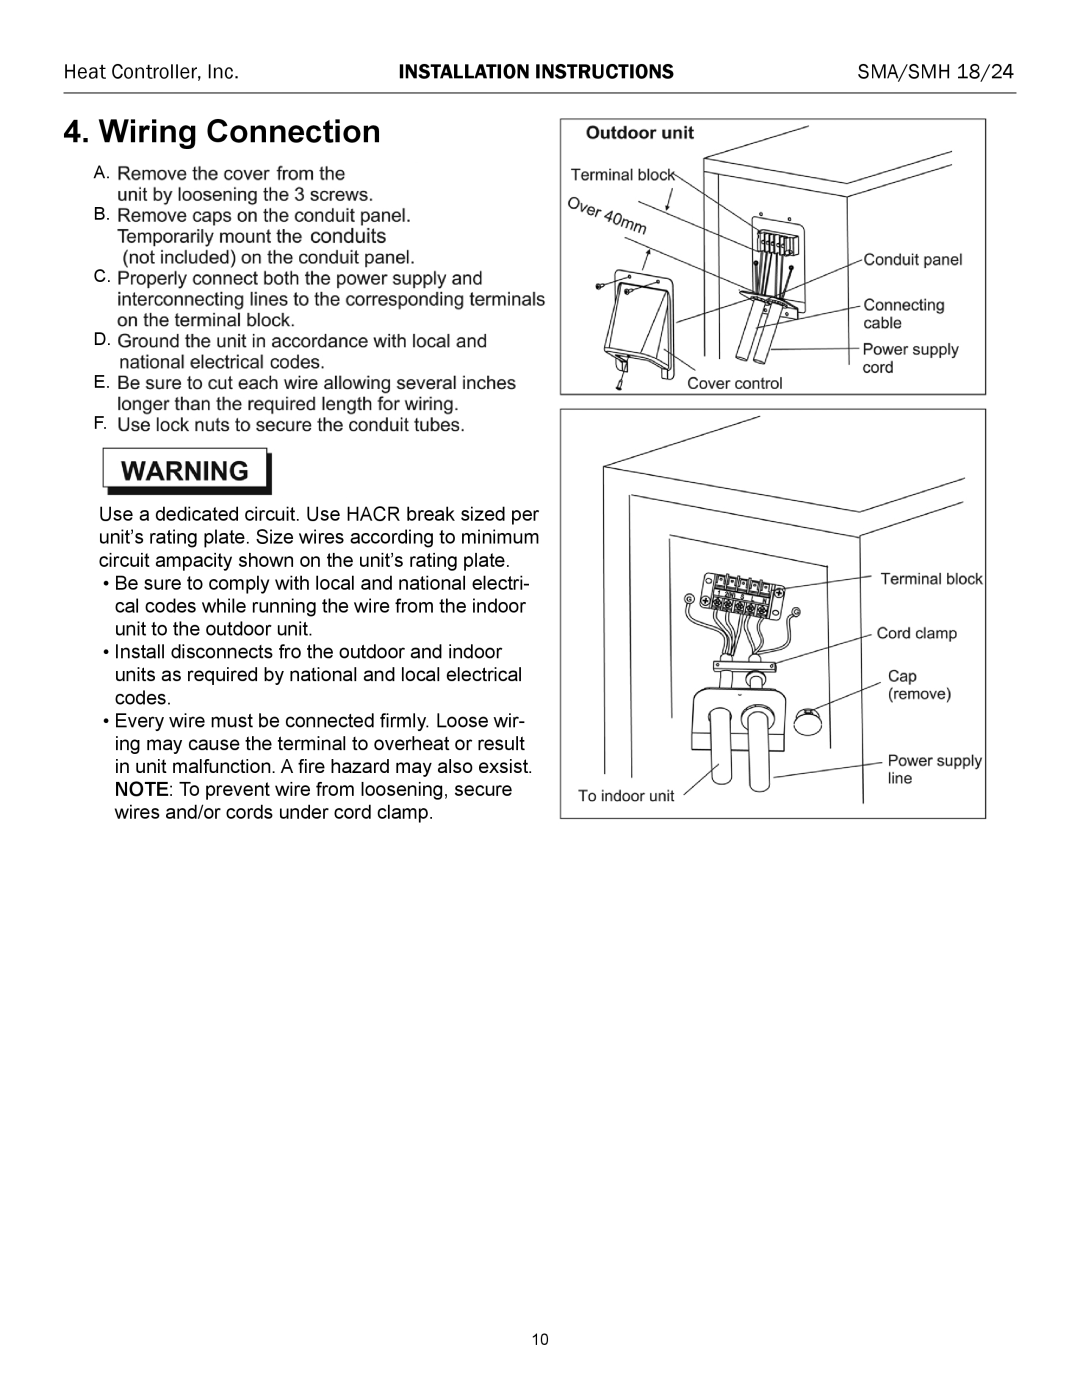 Heat Controller SMA/SMH 18/24 Wiring Connection, Heat Controller, Inc, Installation Instructions, A B C D E F 